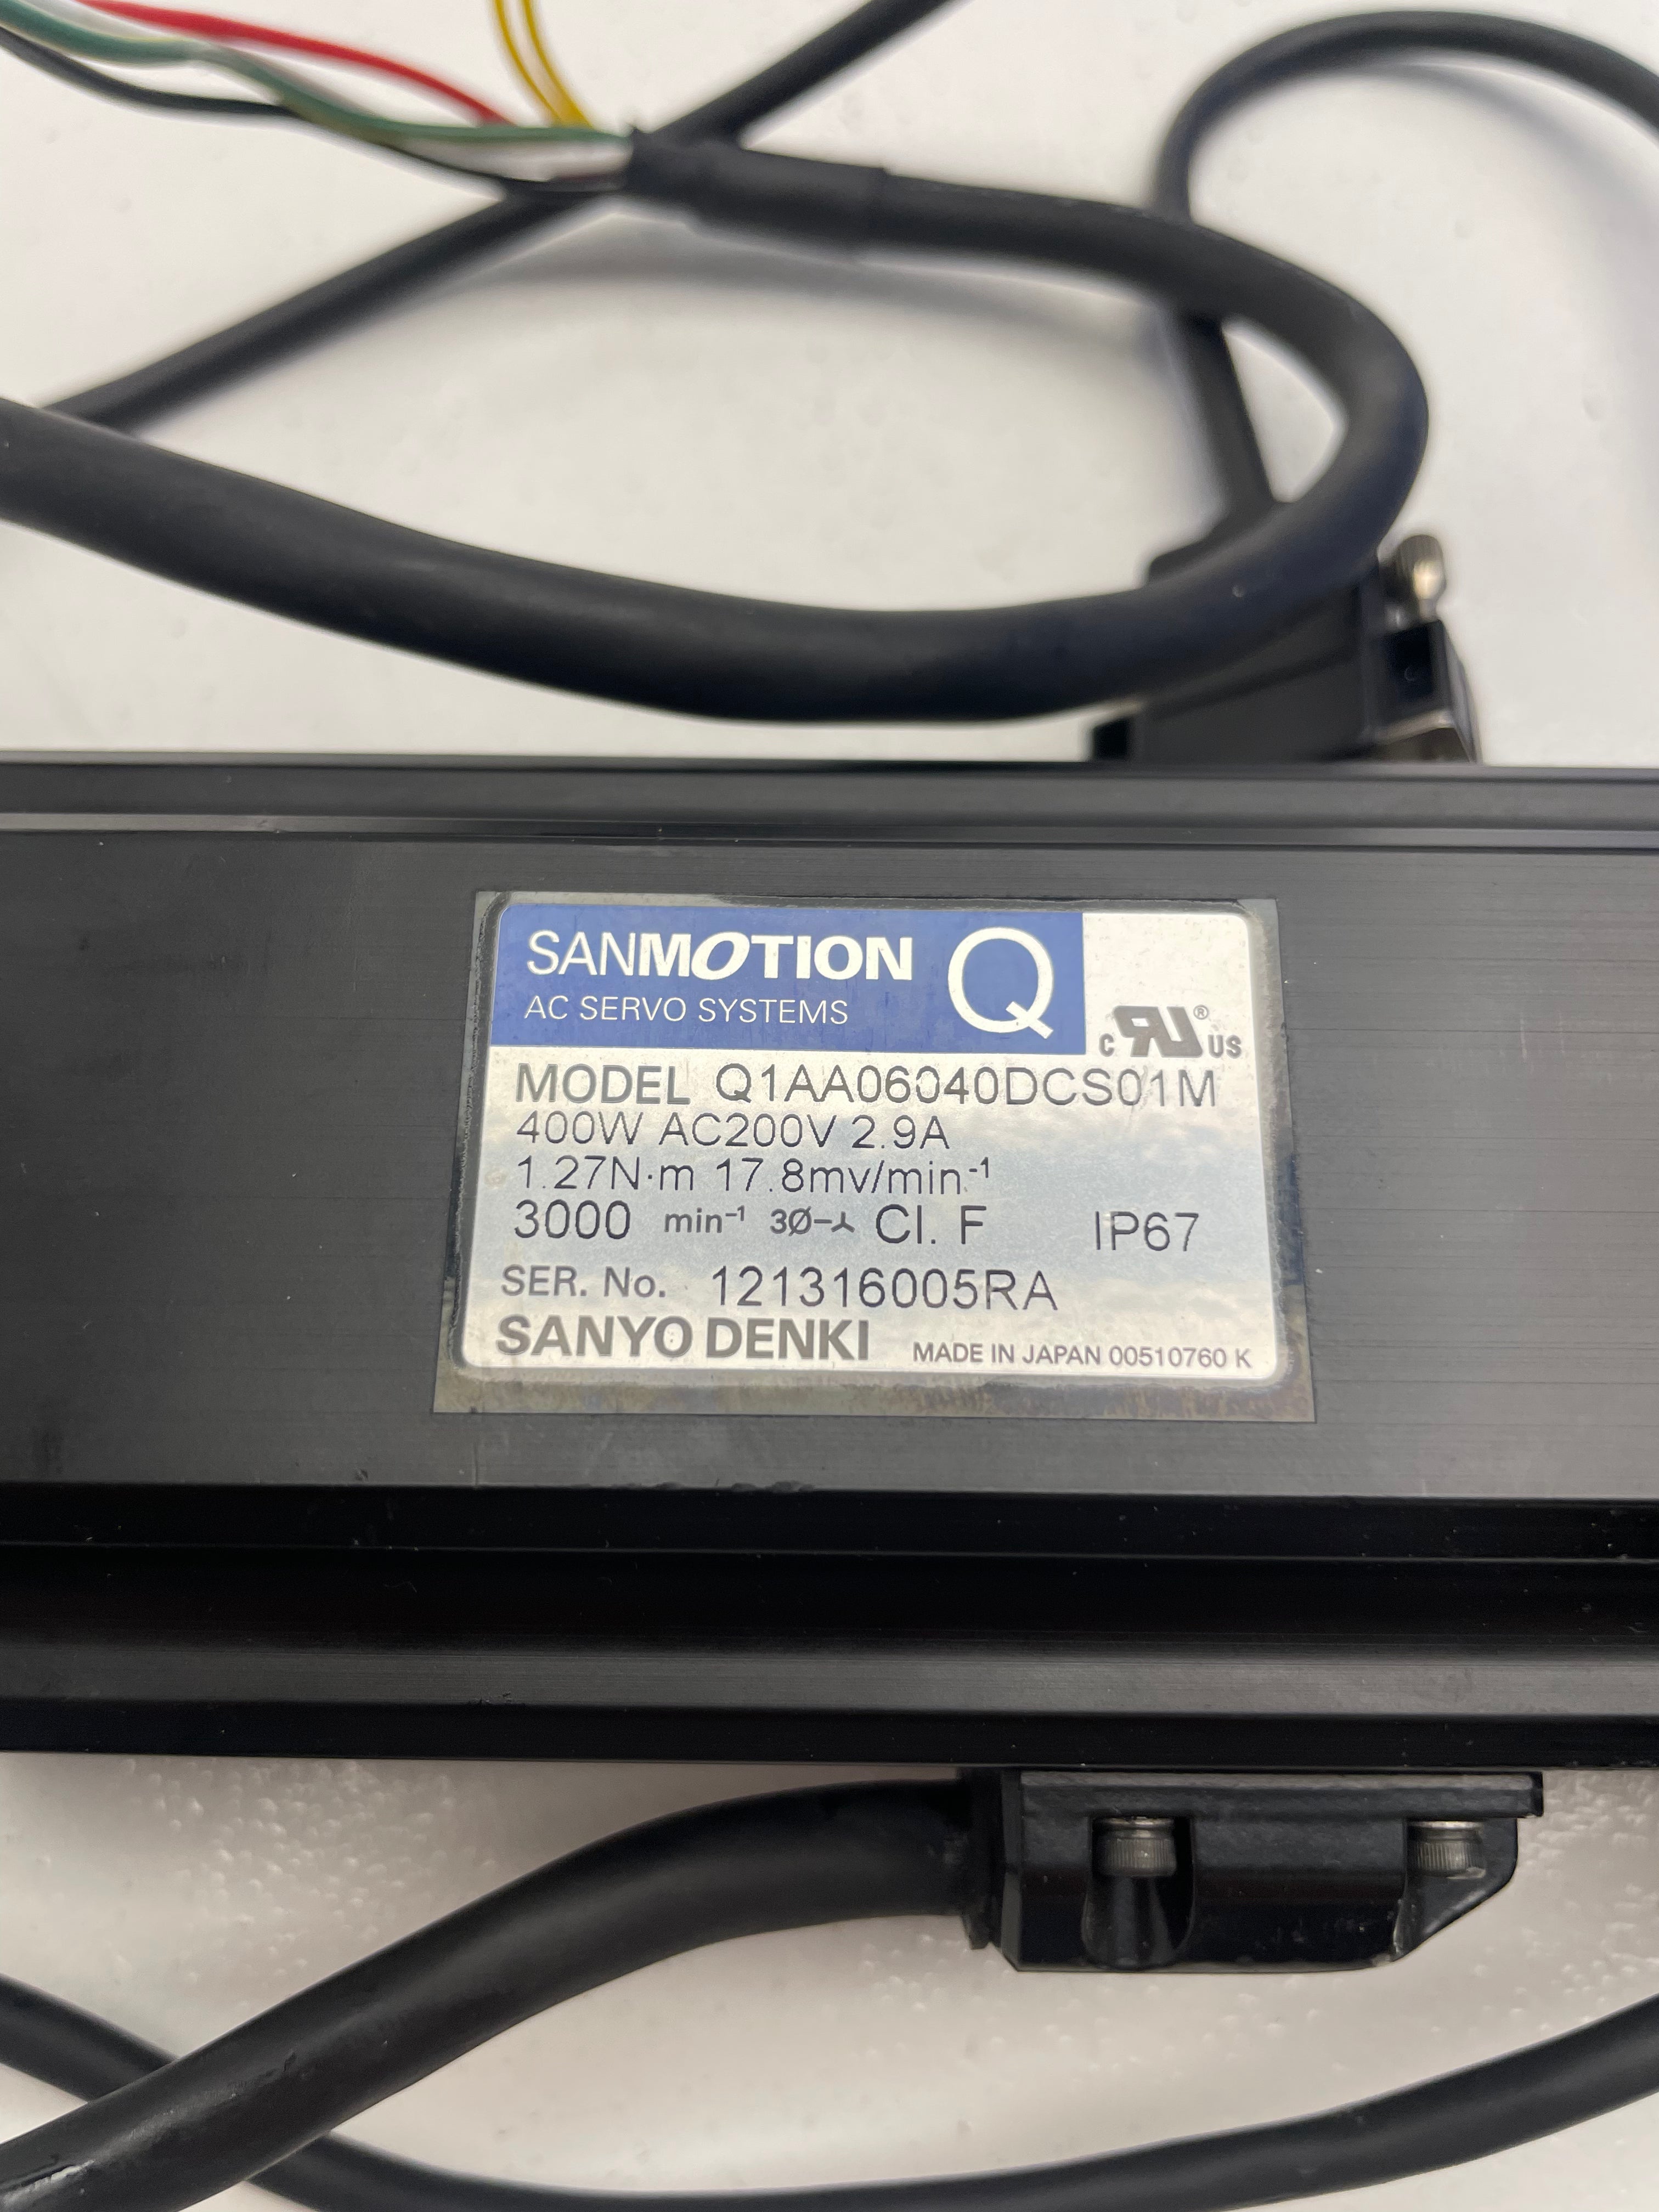 Sanyo Denki / Sanmotion Q1AA06040DCS01M